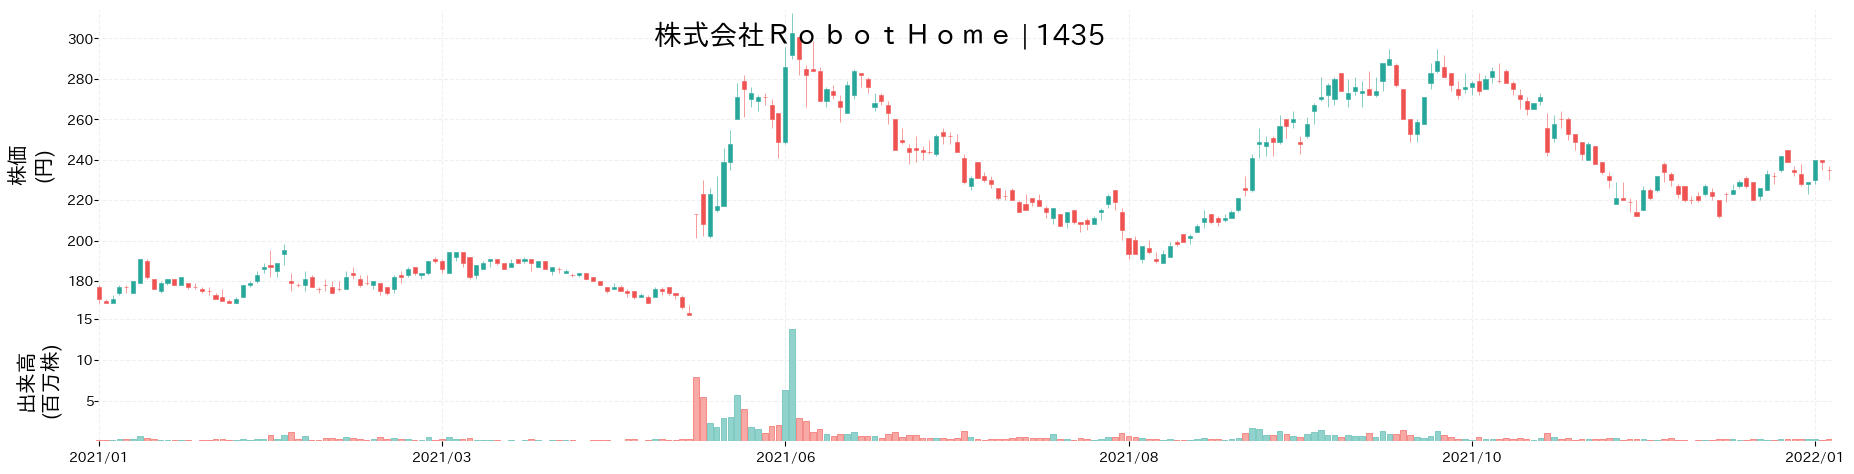 Robot Home TATERU)の株価推移(2021)